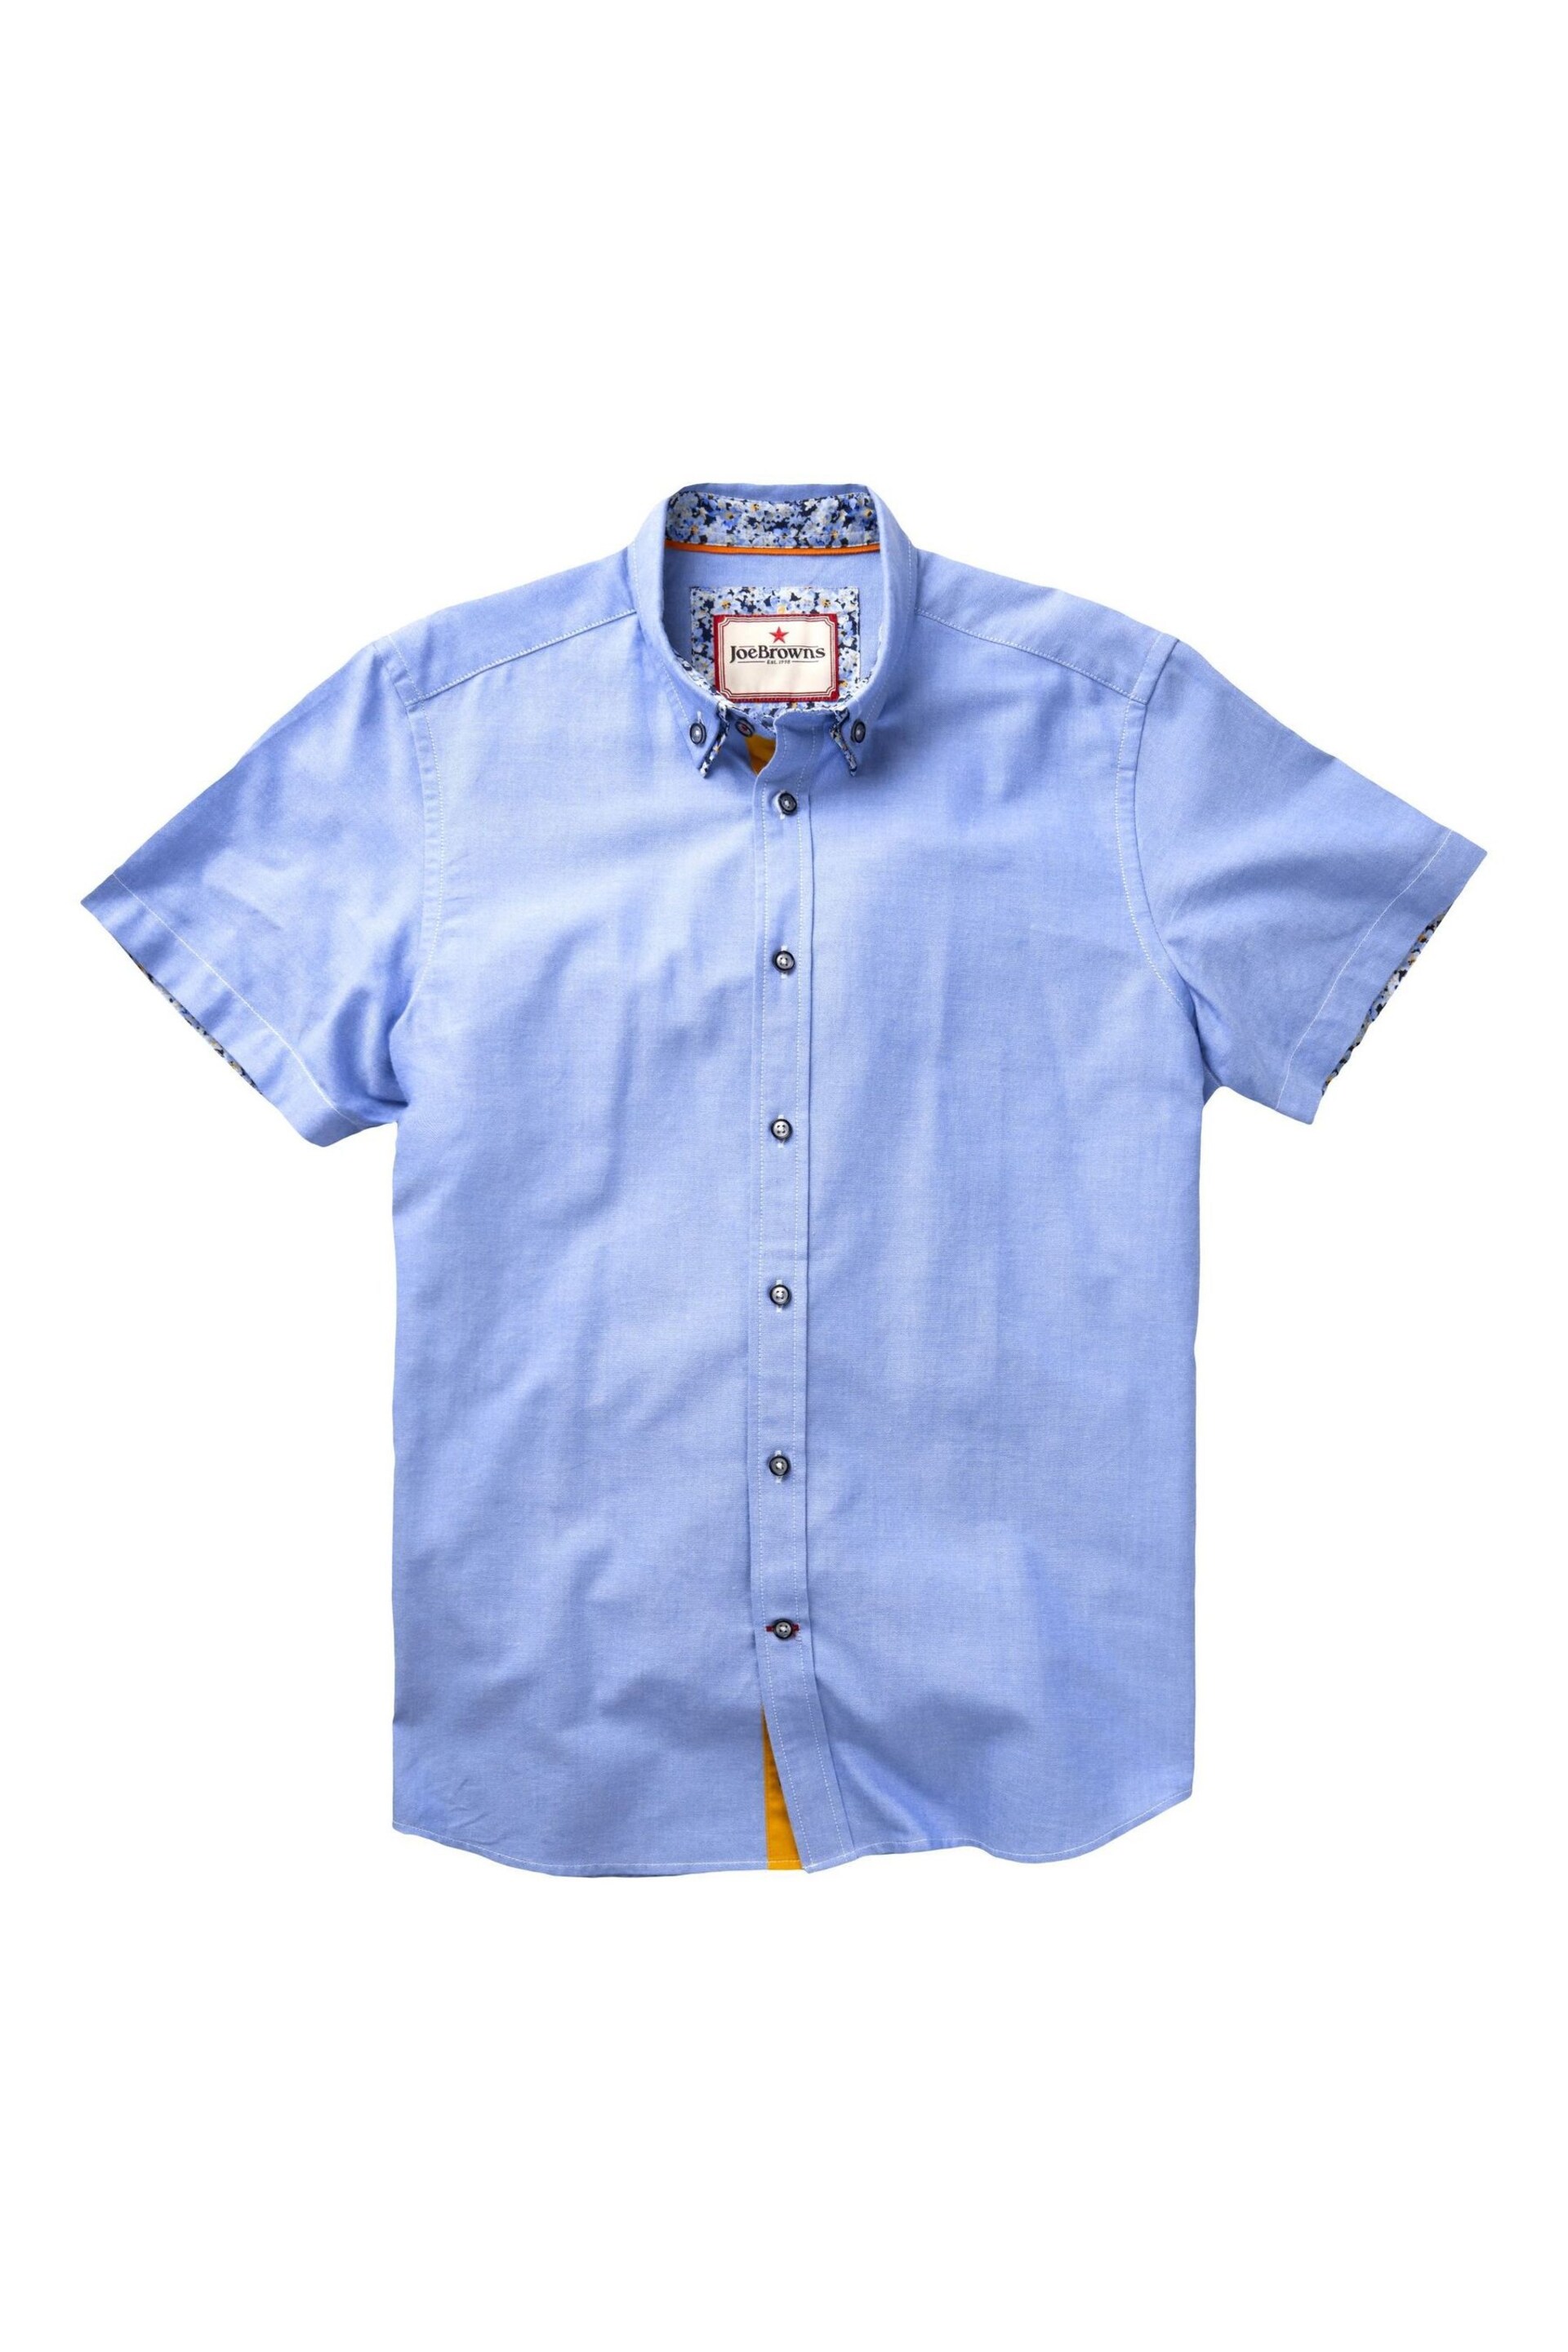 Joe Browns Blue Double Collar Short Sleeve Oxford Shirt - Image 7 of 7